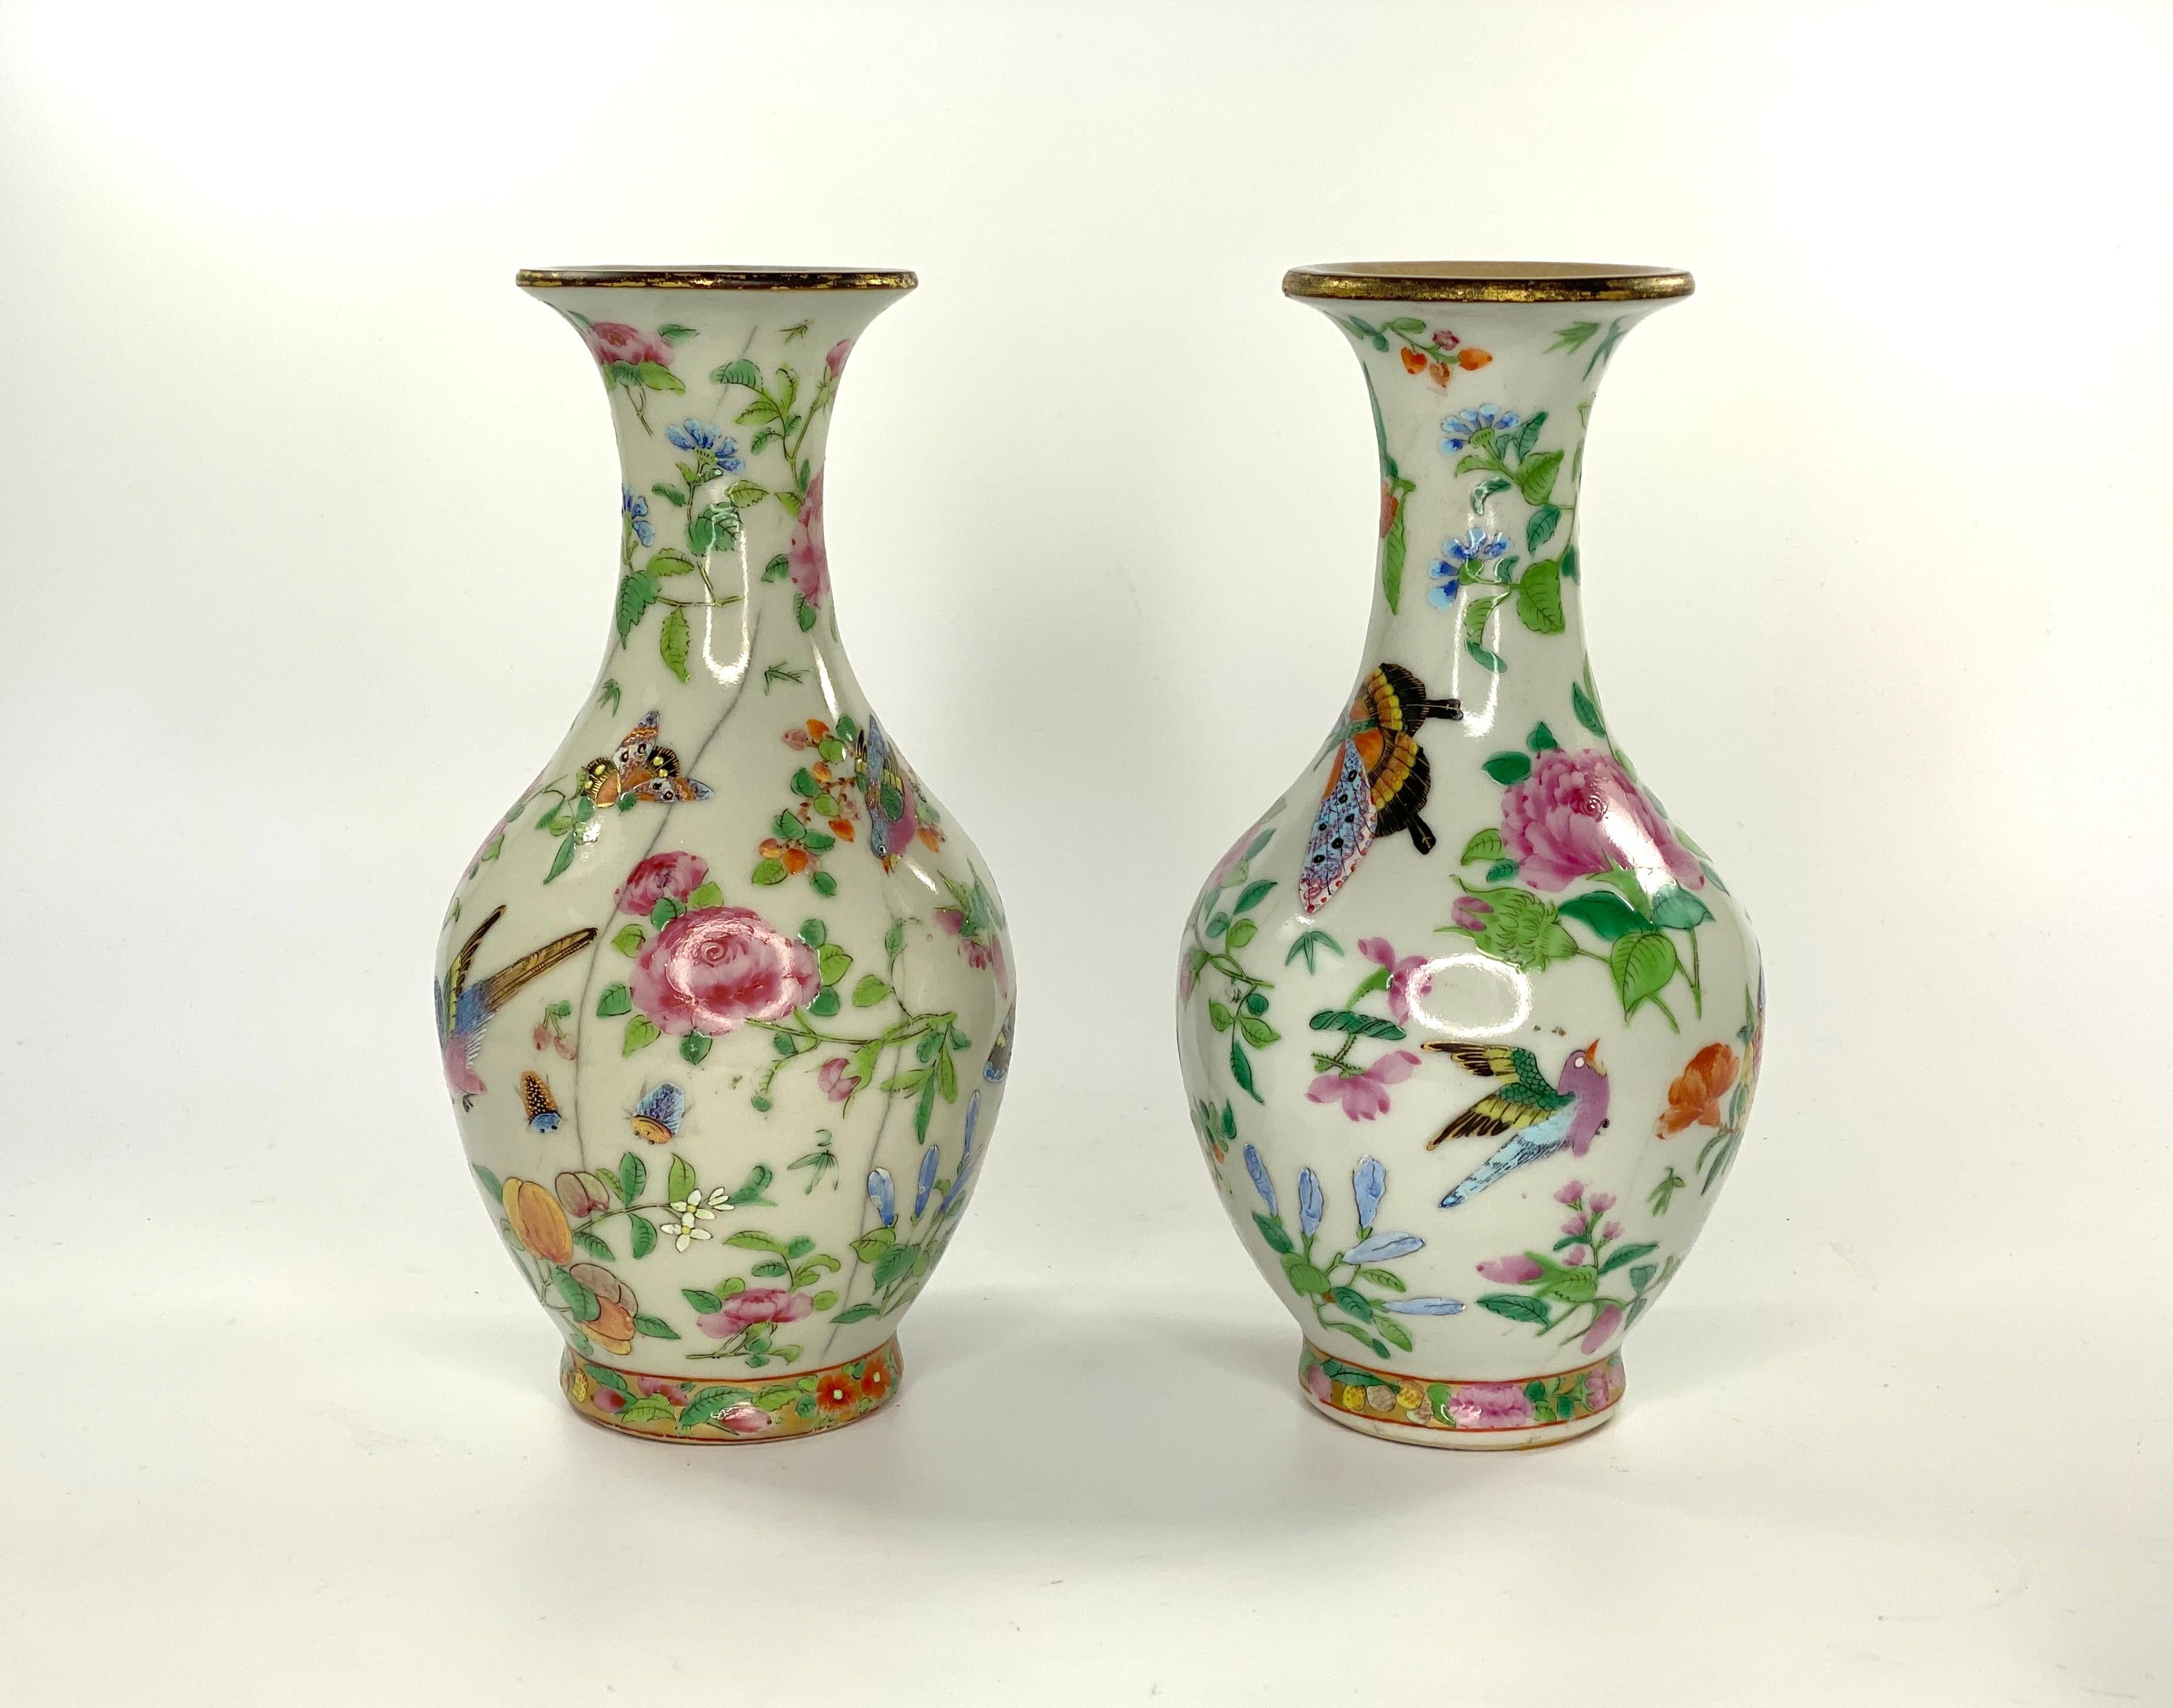 Qing Chinese Crackle Glaze Vases, Famille Rose Decoration, circa 1880